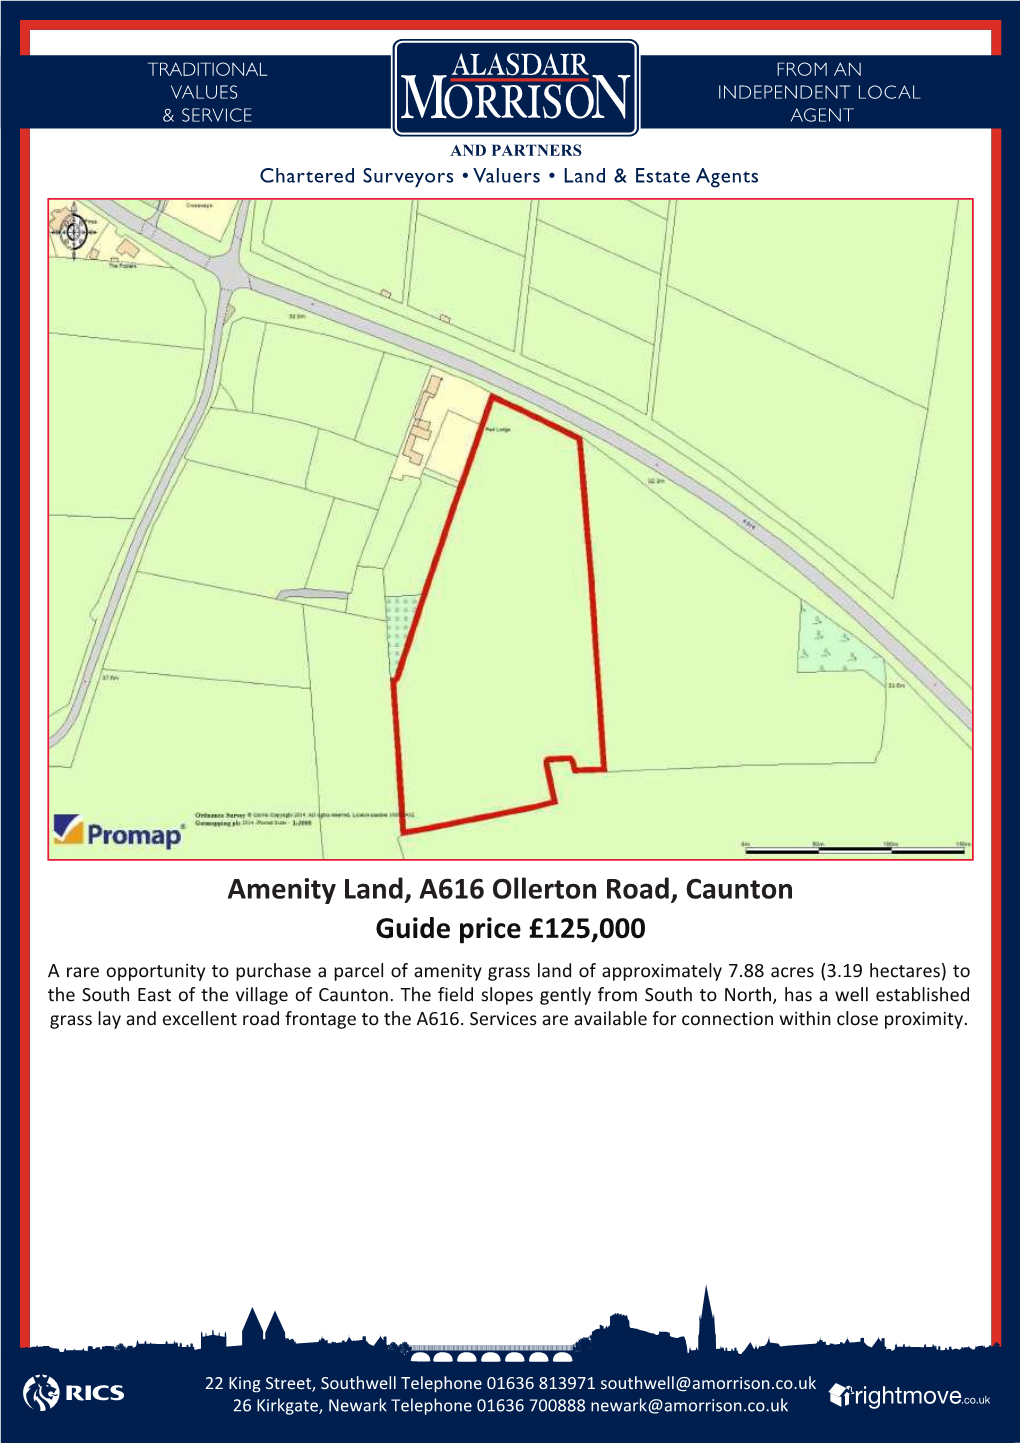 Amenity Land, A616 Ollerton Road, Caunton Guide Price £125,000